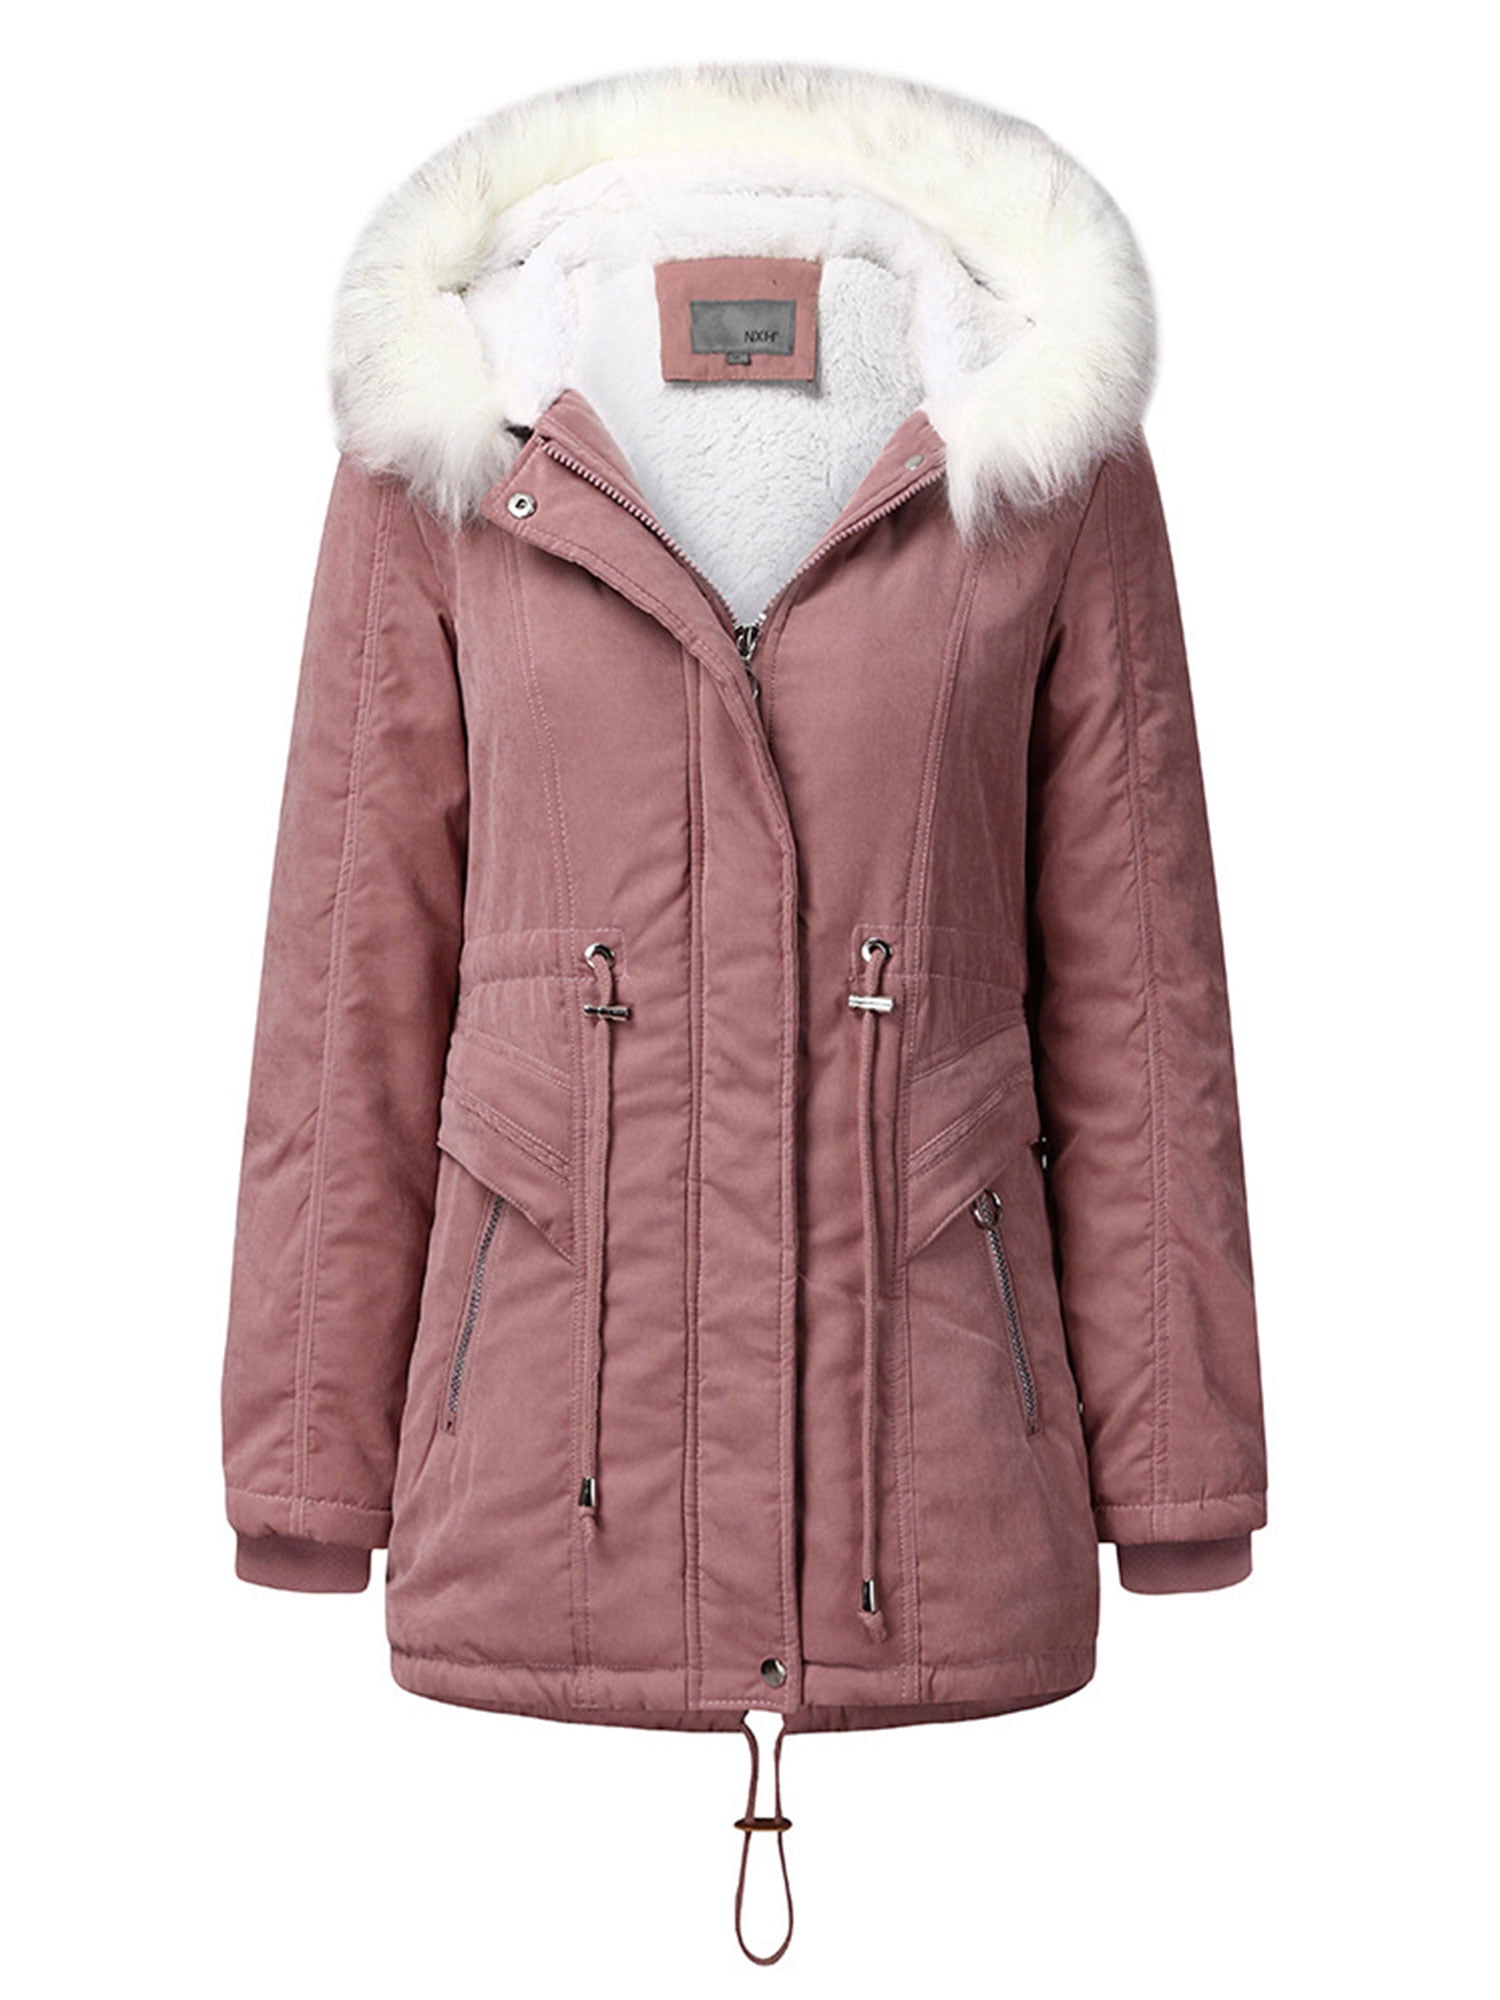 Stradivarius jacket Pink M WOMEN FASHION Jackets Fur discount 63% 